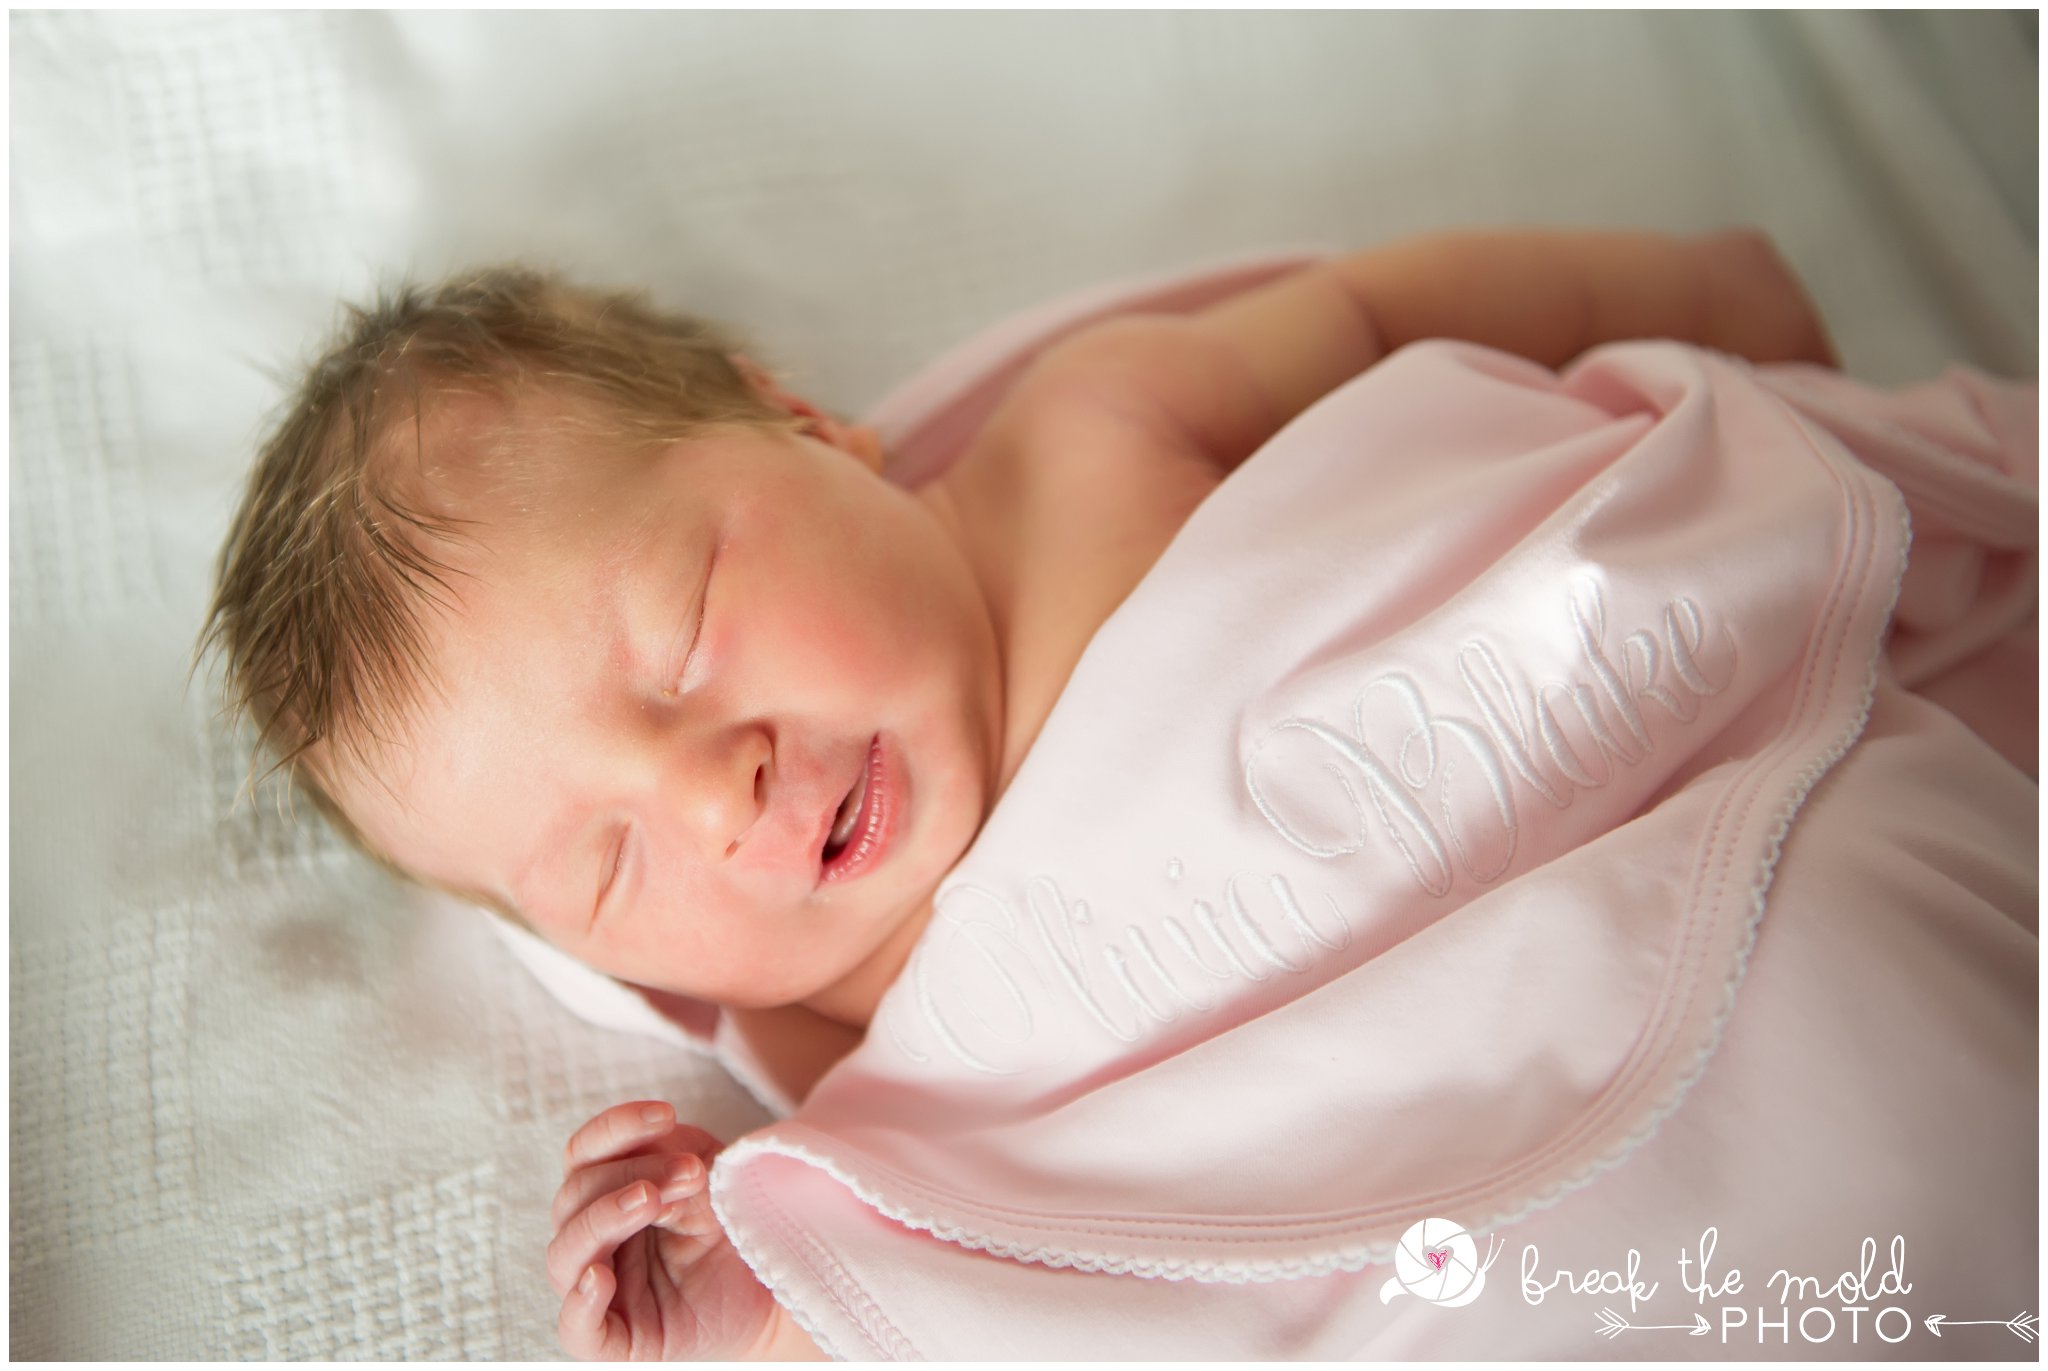 fresh-24-newborn-in-hospital-break-the-mold-photo-baby-girl-sweet-in-room-photos (19).jpg